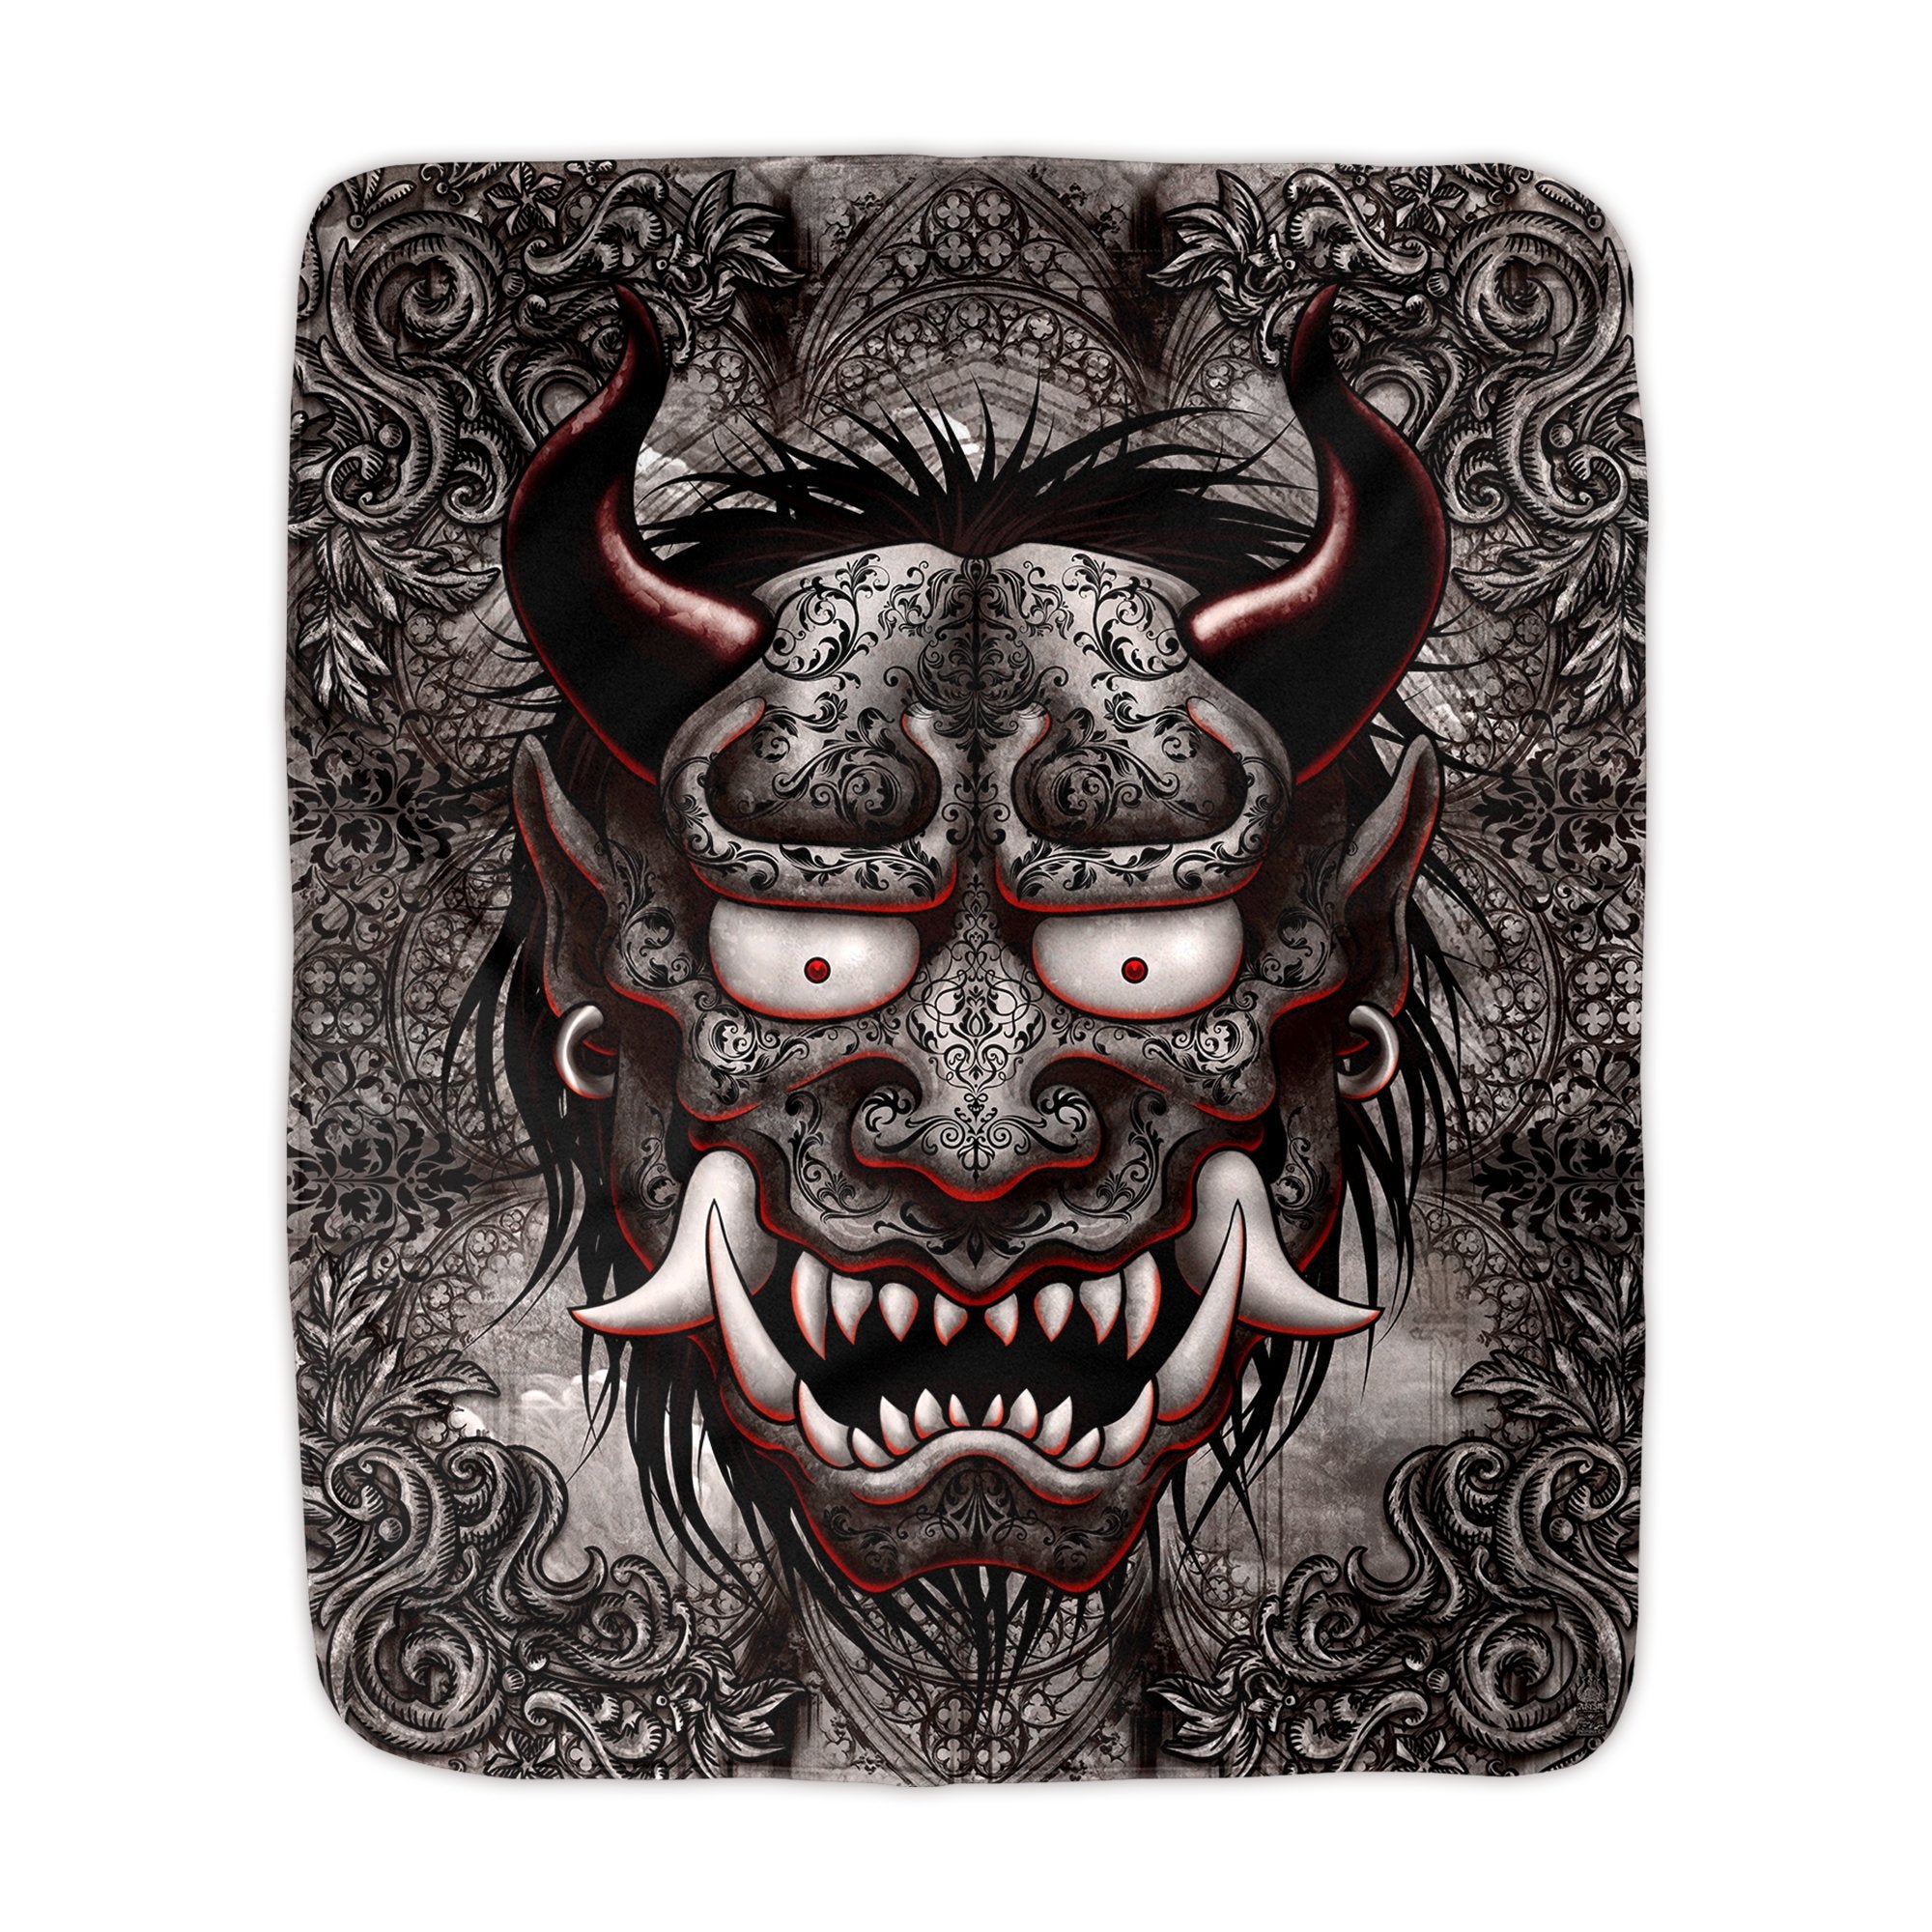 Gothic Sherpa Fleece Throw Blanket, Japanese Oni Demon, Alternative and Goth Home Decor, Alternative Art Gift - Beige or Grey, 2 Colors - Abysm Internal